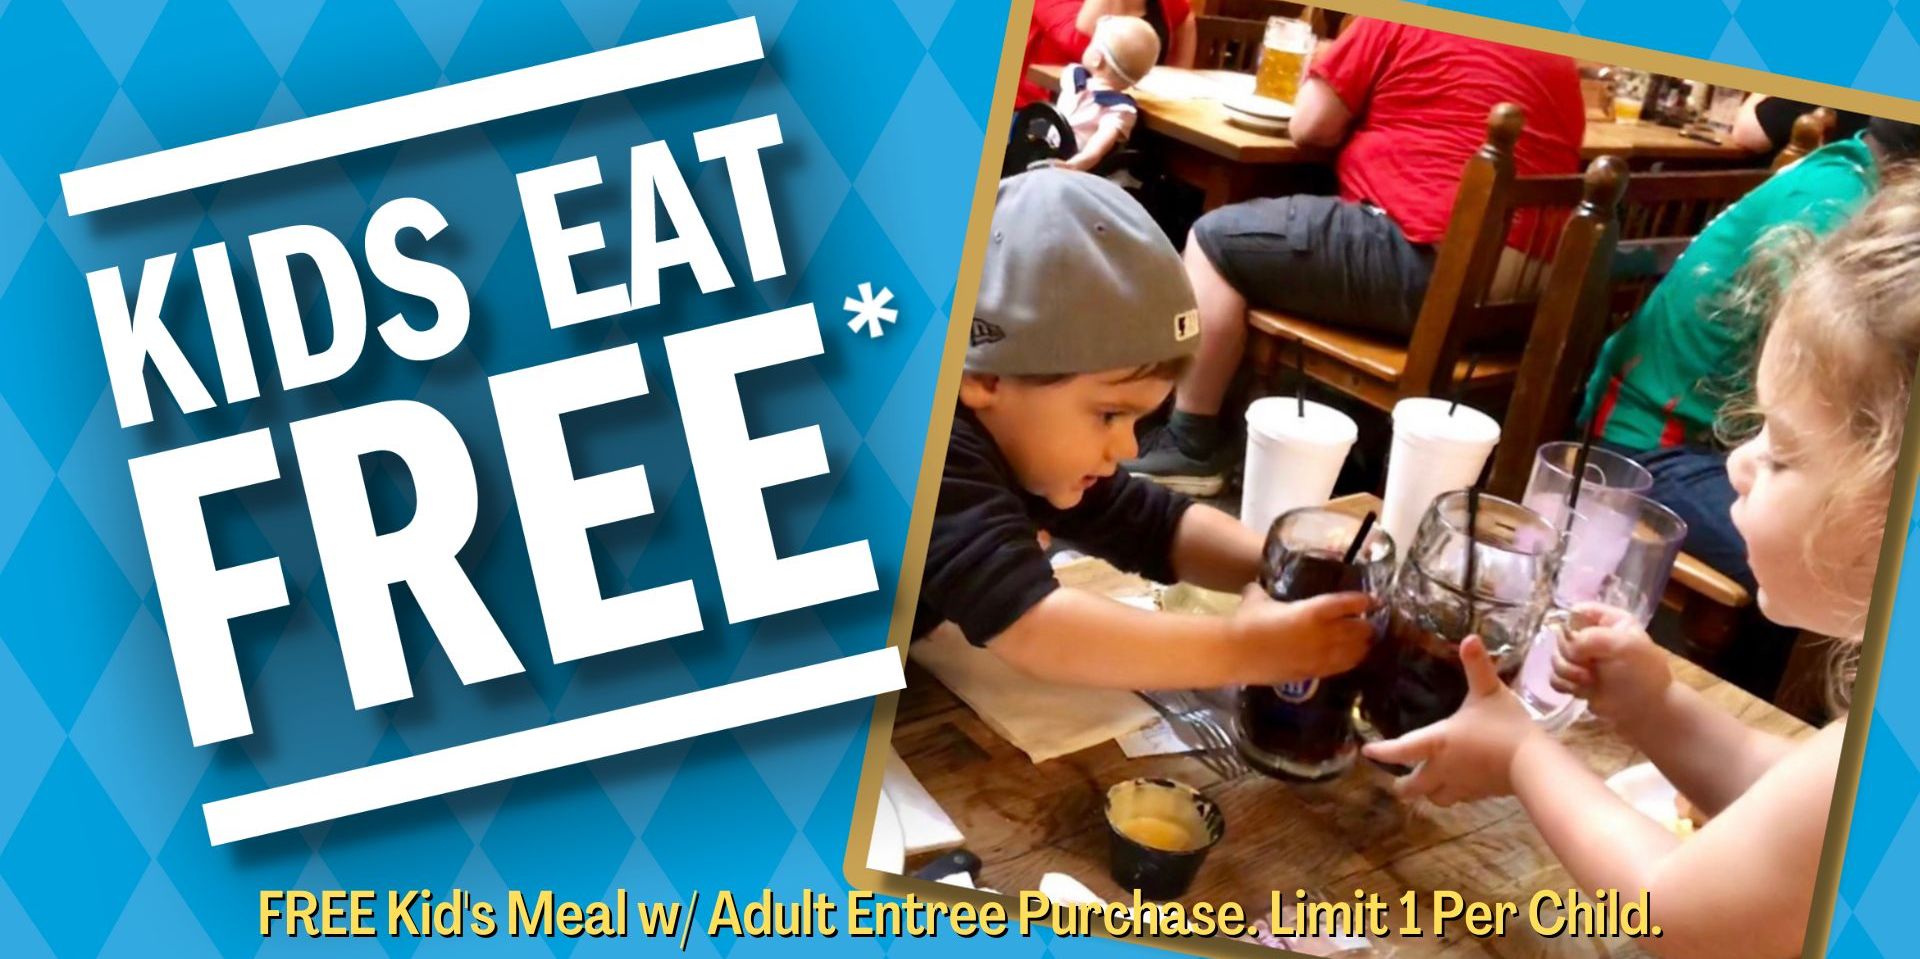 Kids Eat FREE*! promotional image